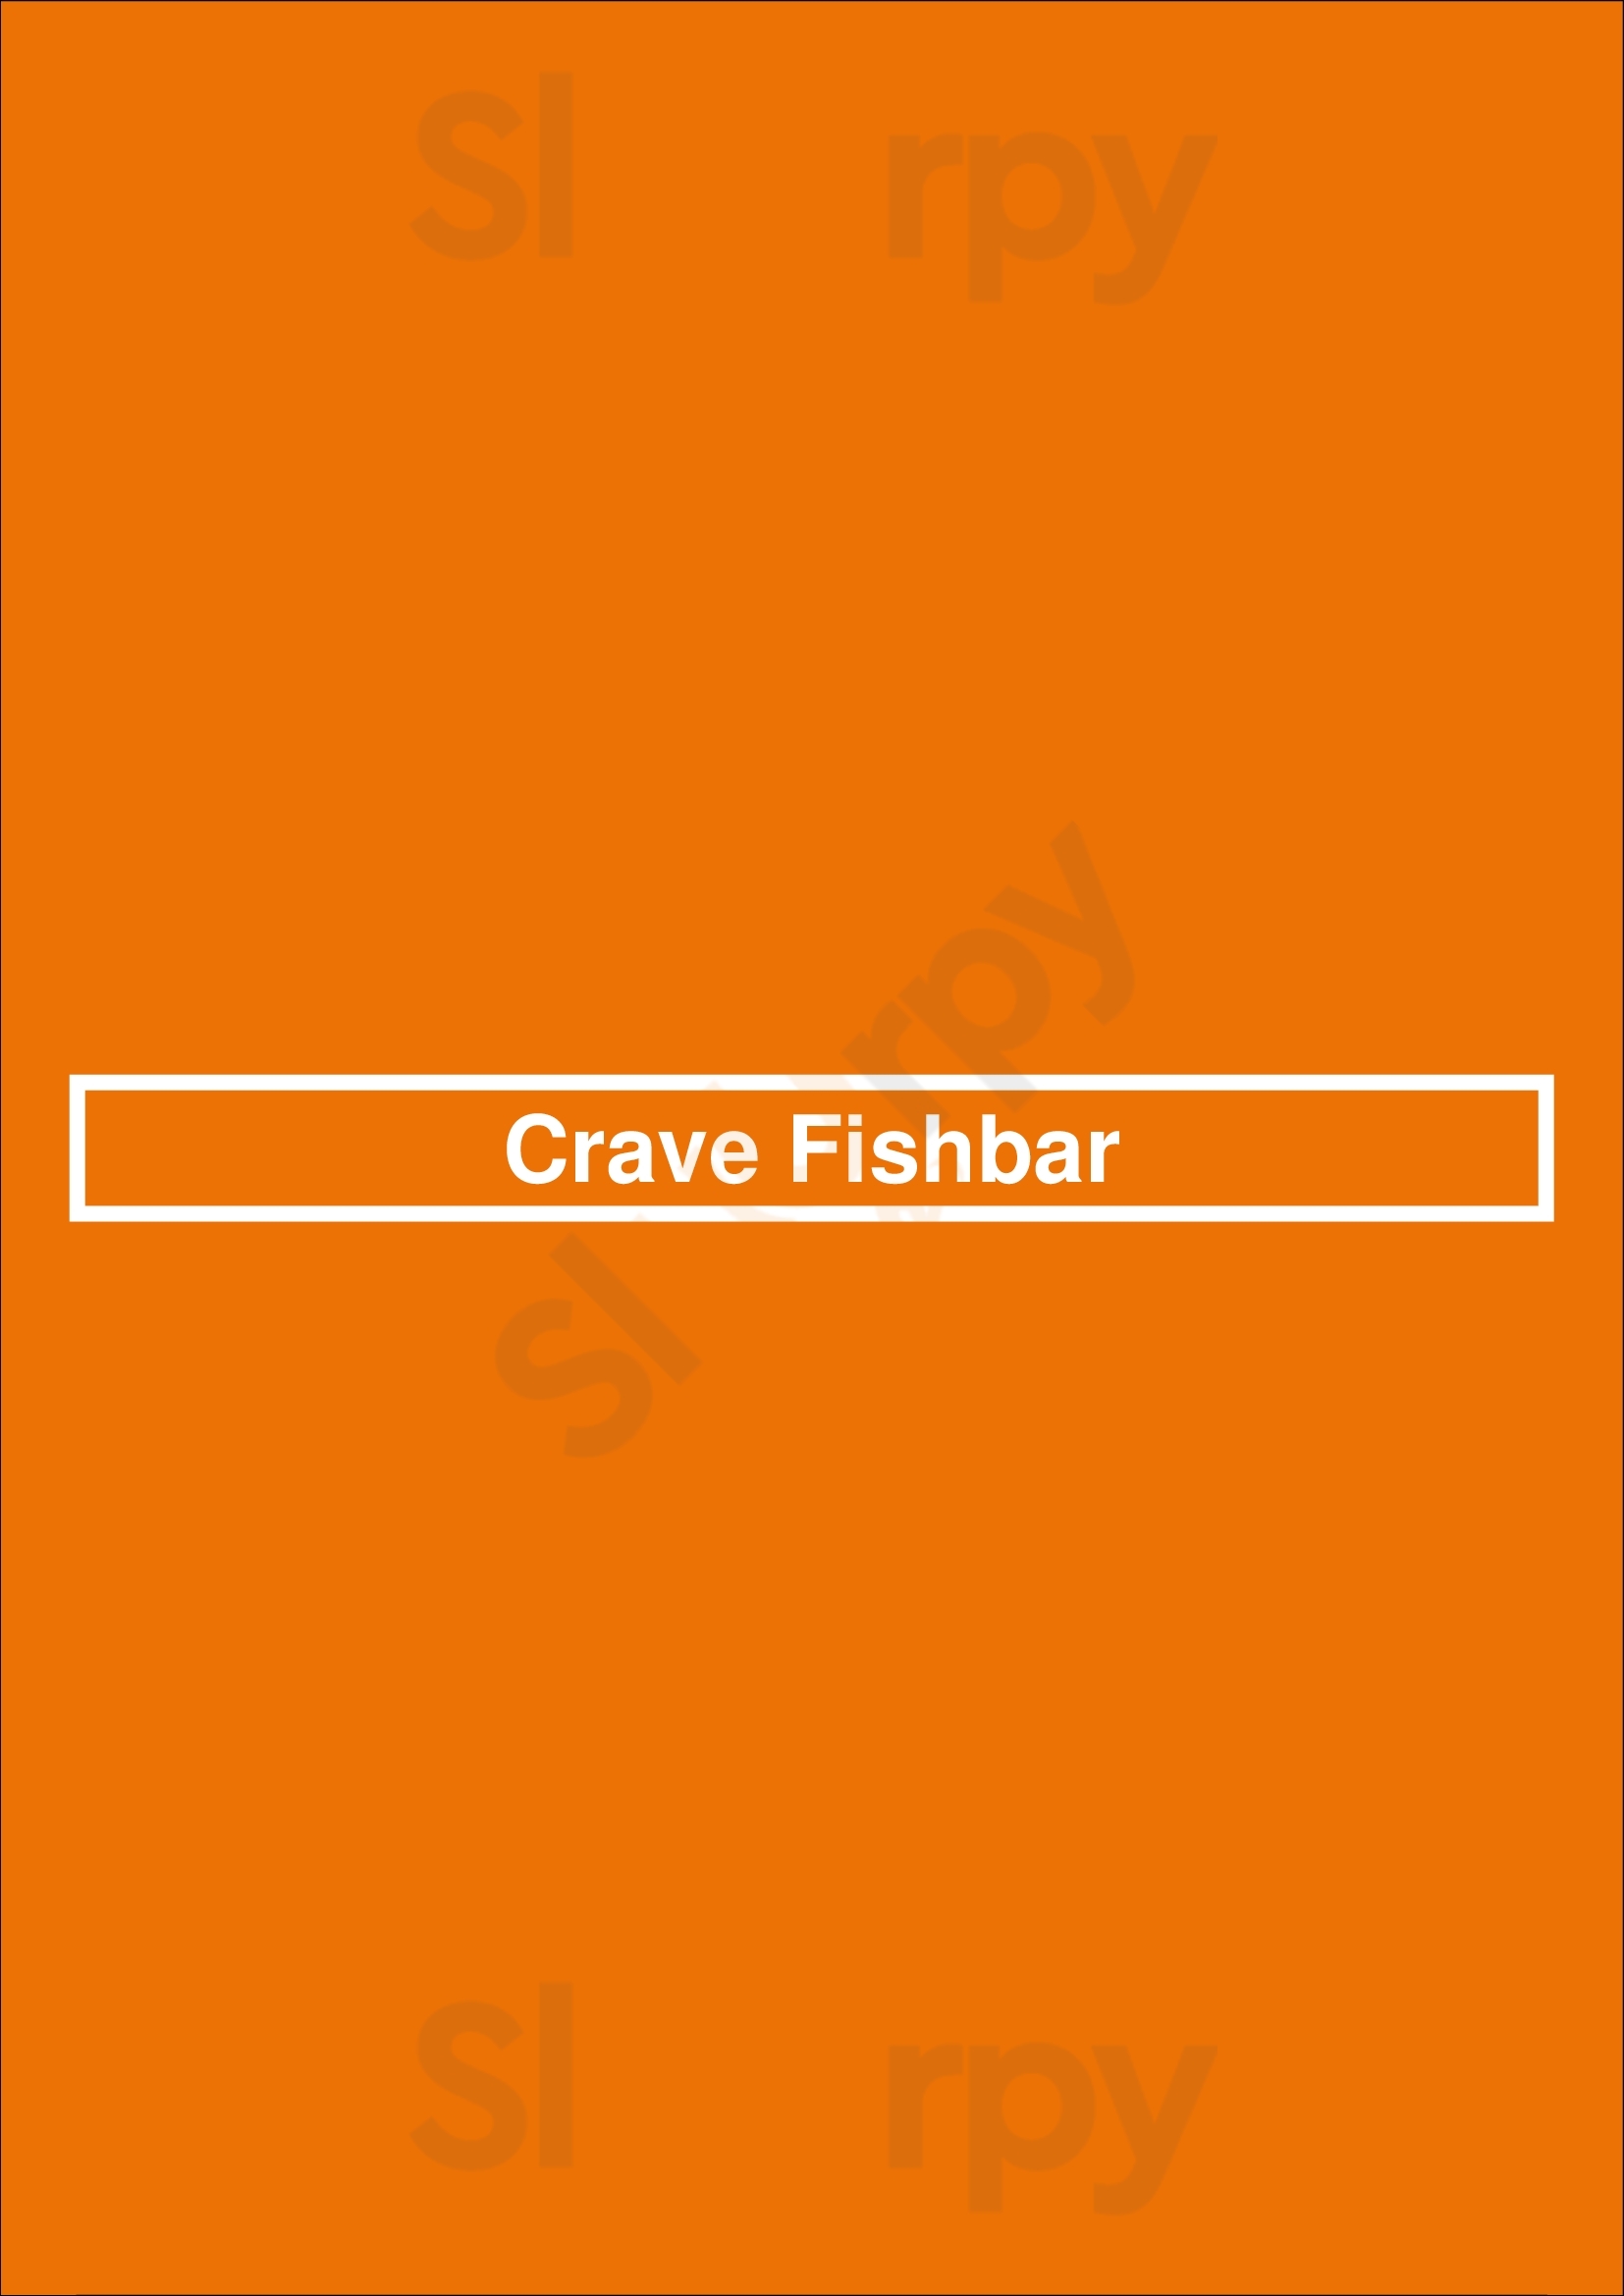 Crave Fishbar New York City Menu - 1